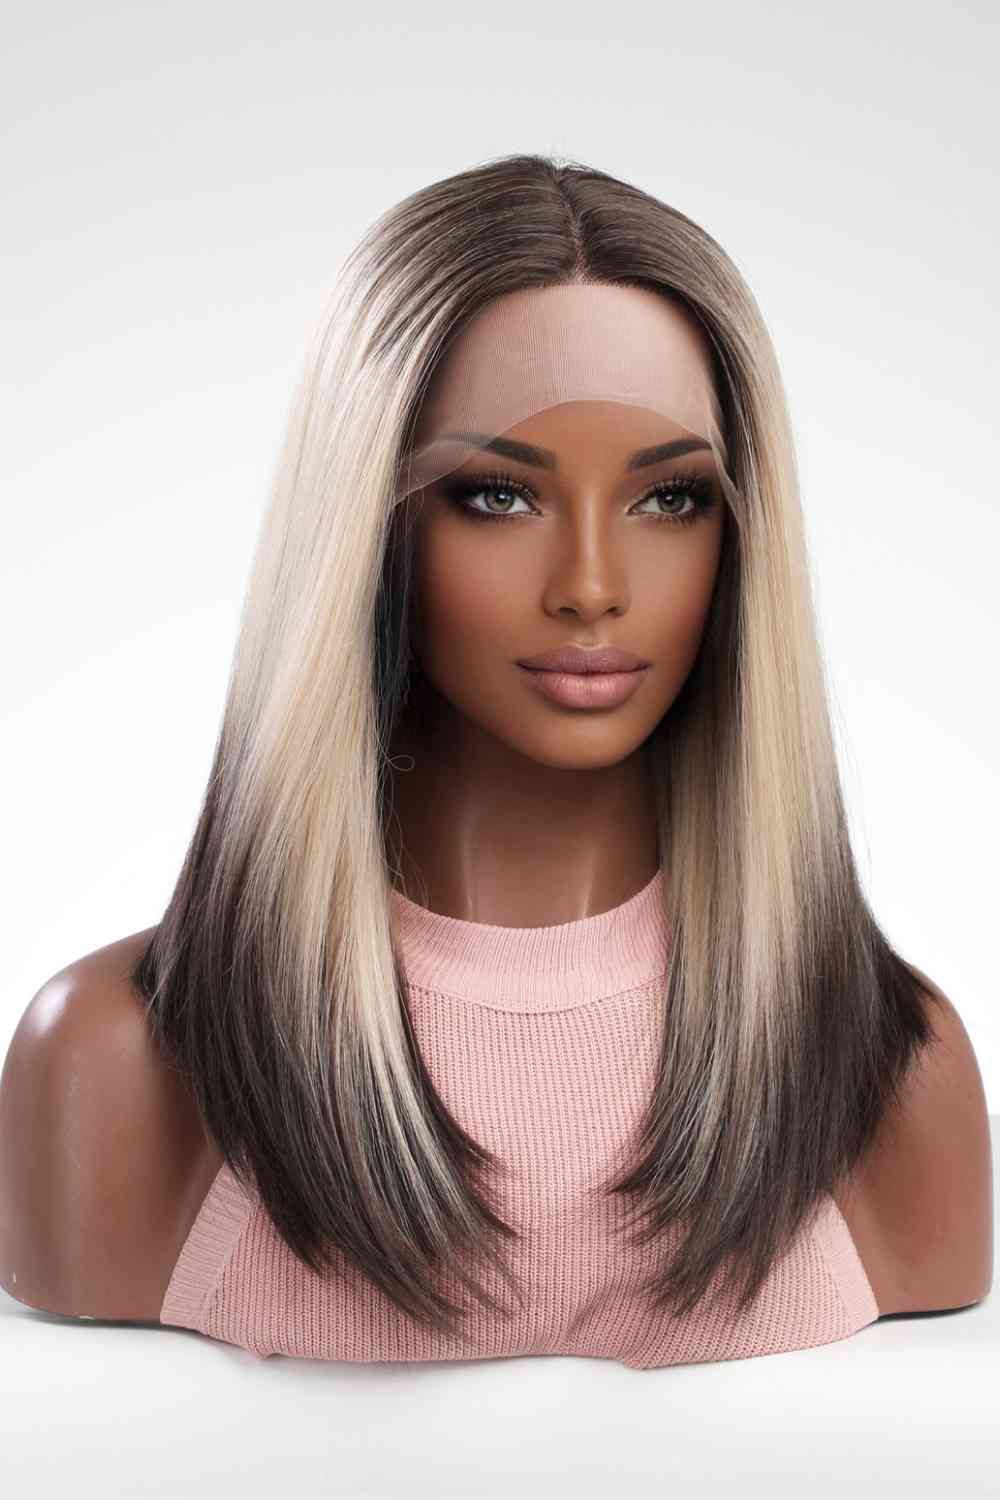 TEEK - Blonde/Brown Lace Front Synthetic Straight 16" Wig HAIR TEEK Trend   